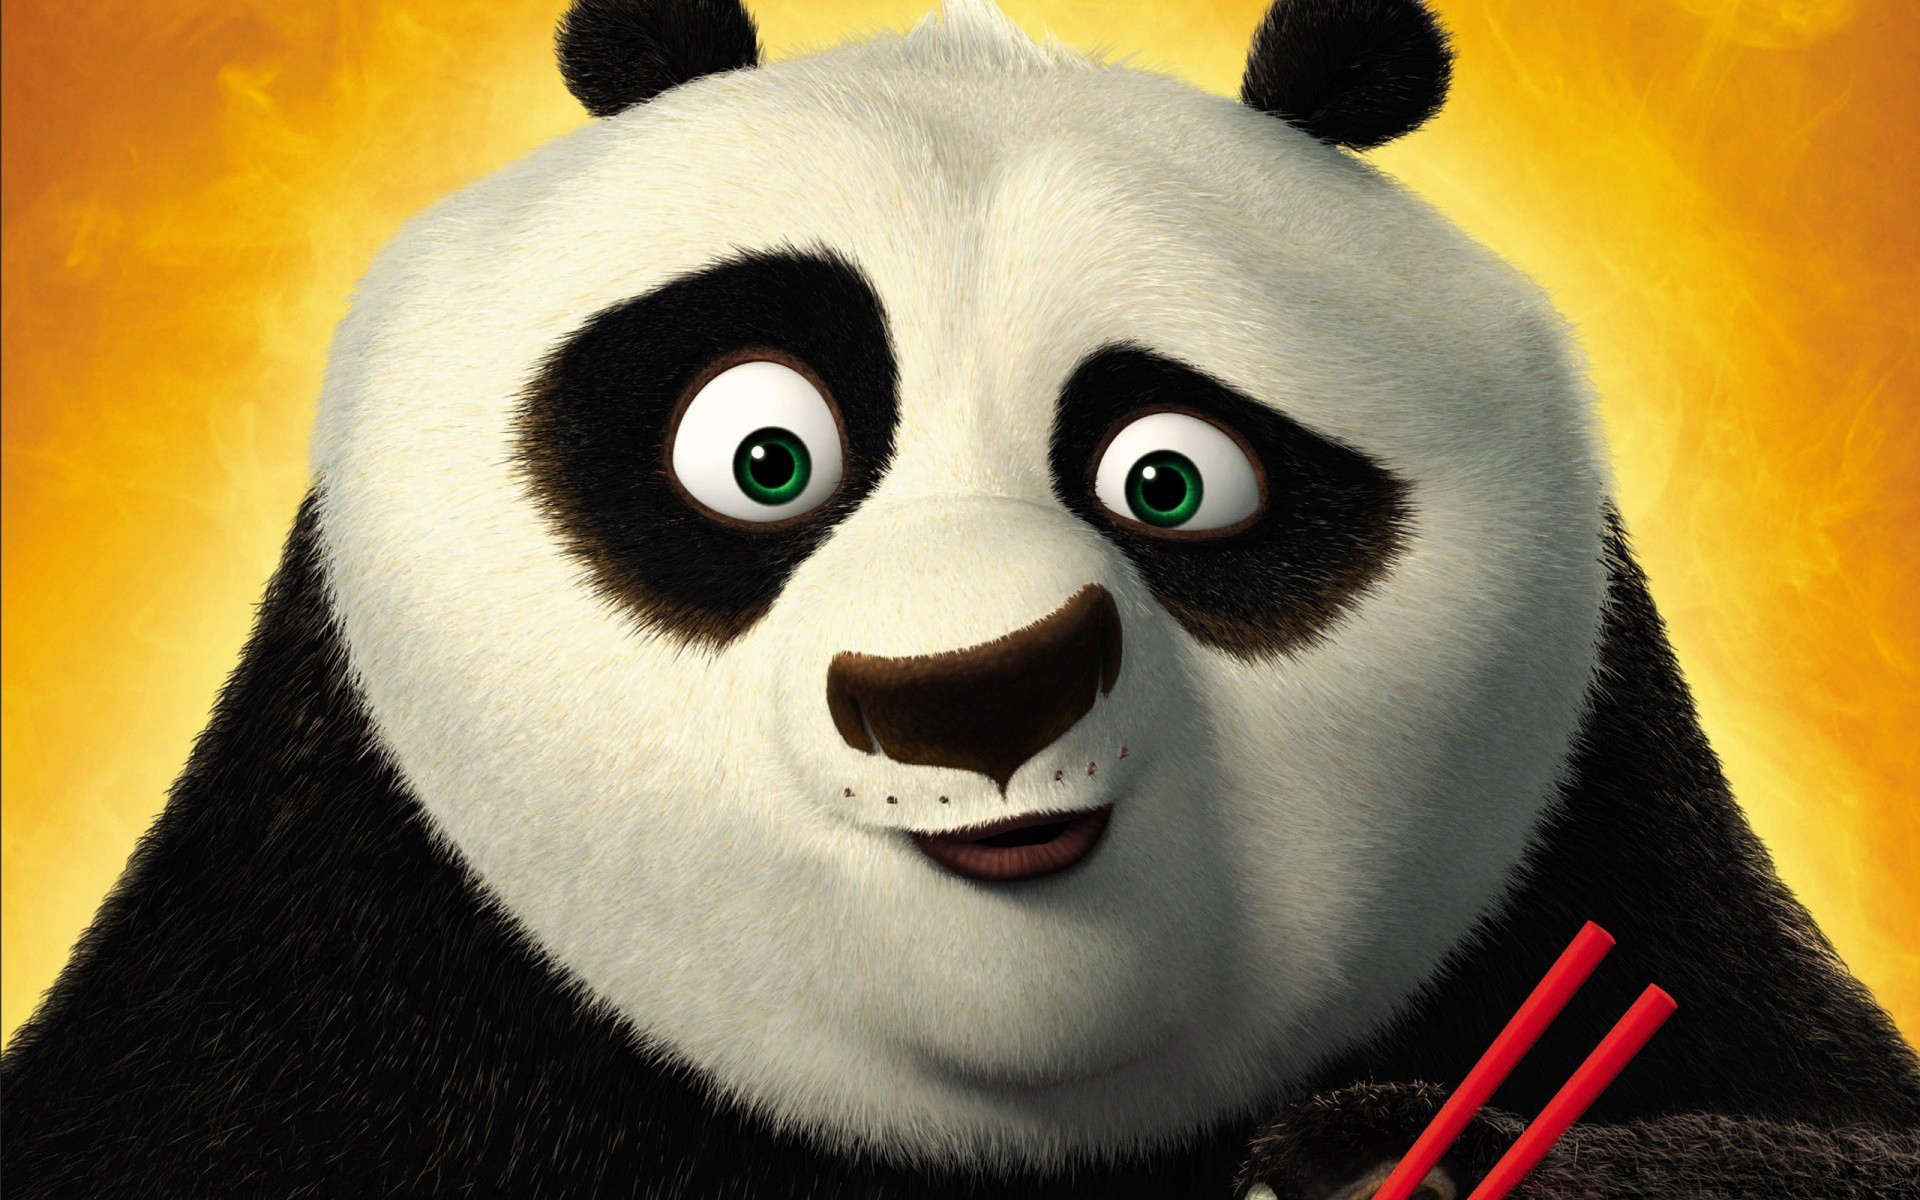 228493 télécharger l'image kung fu panda, film, kung fu panda 2, po (kung fu panda) - fonds d'écran et économiseurs d'écran gratuits